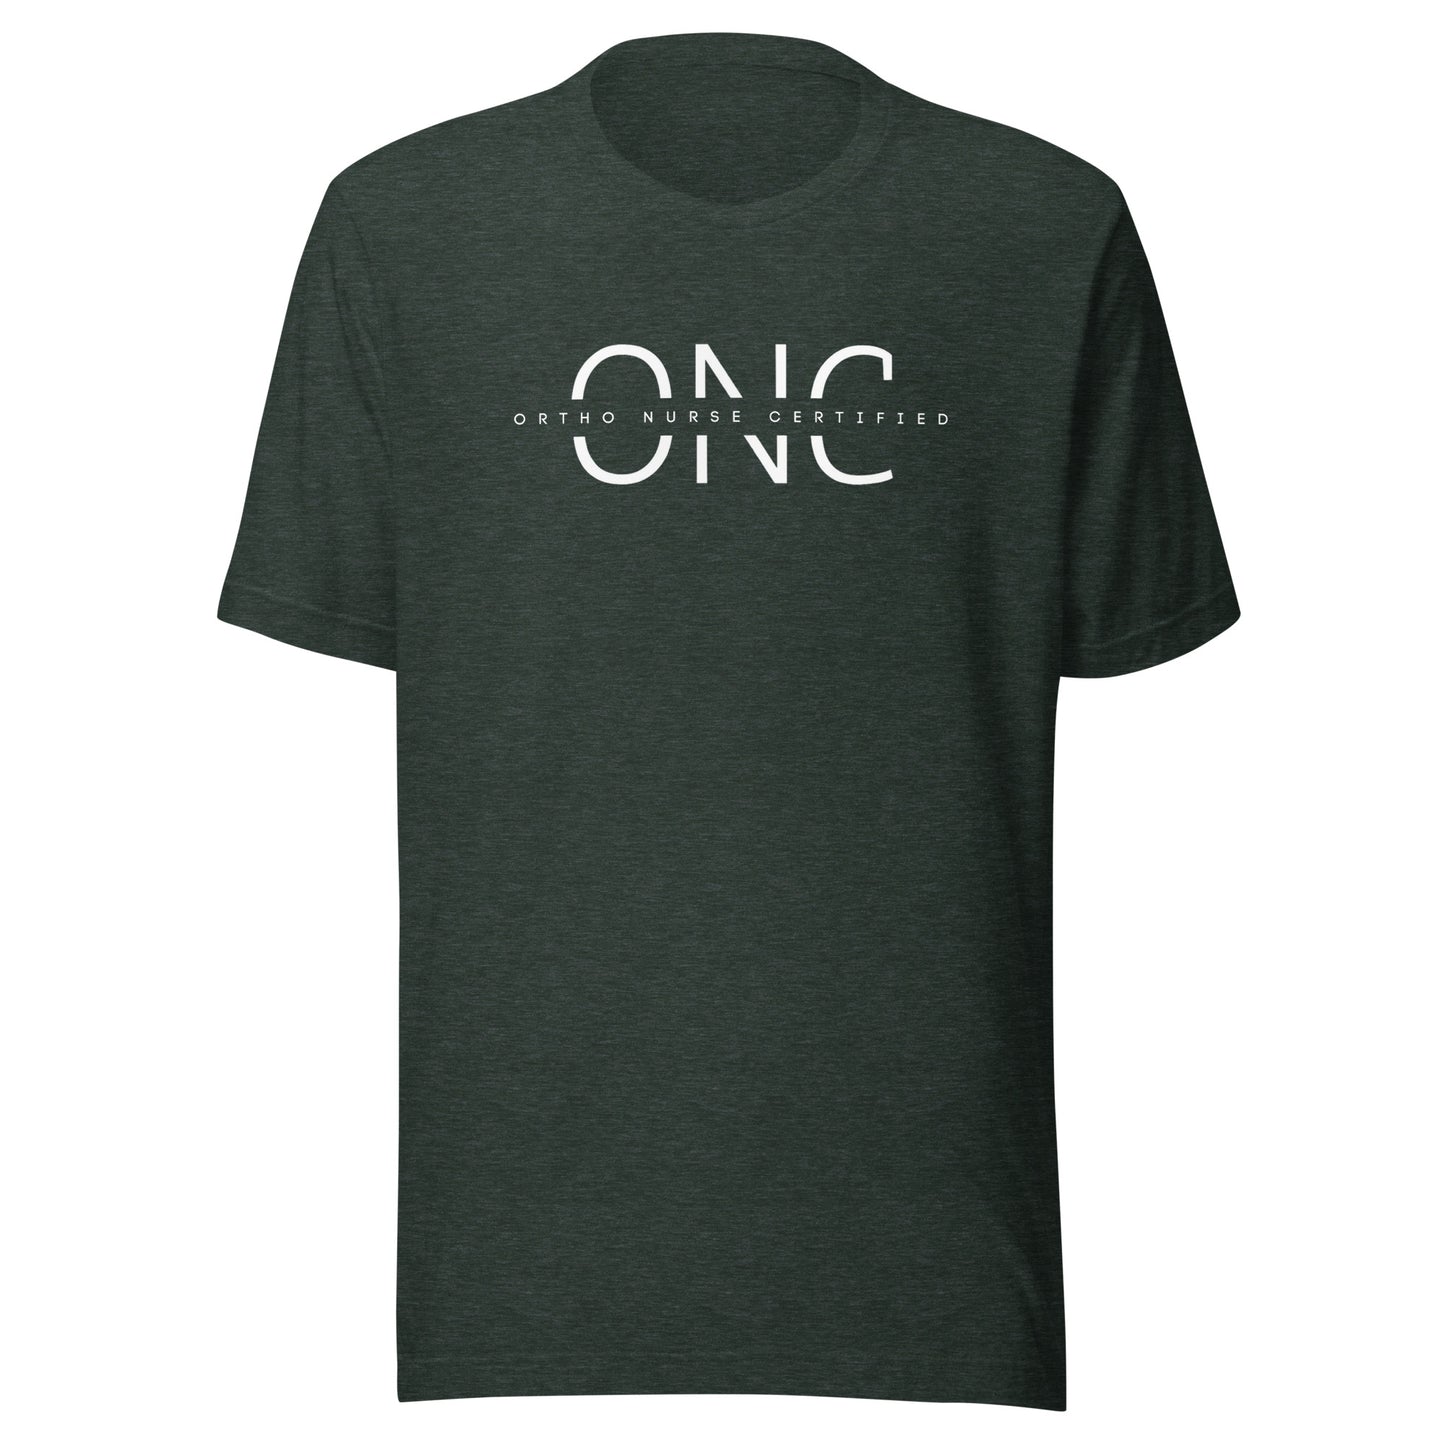 OCN Ortho Nurse Certified t-shirt